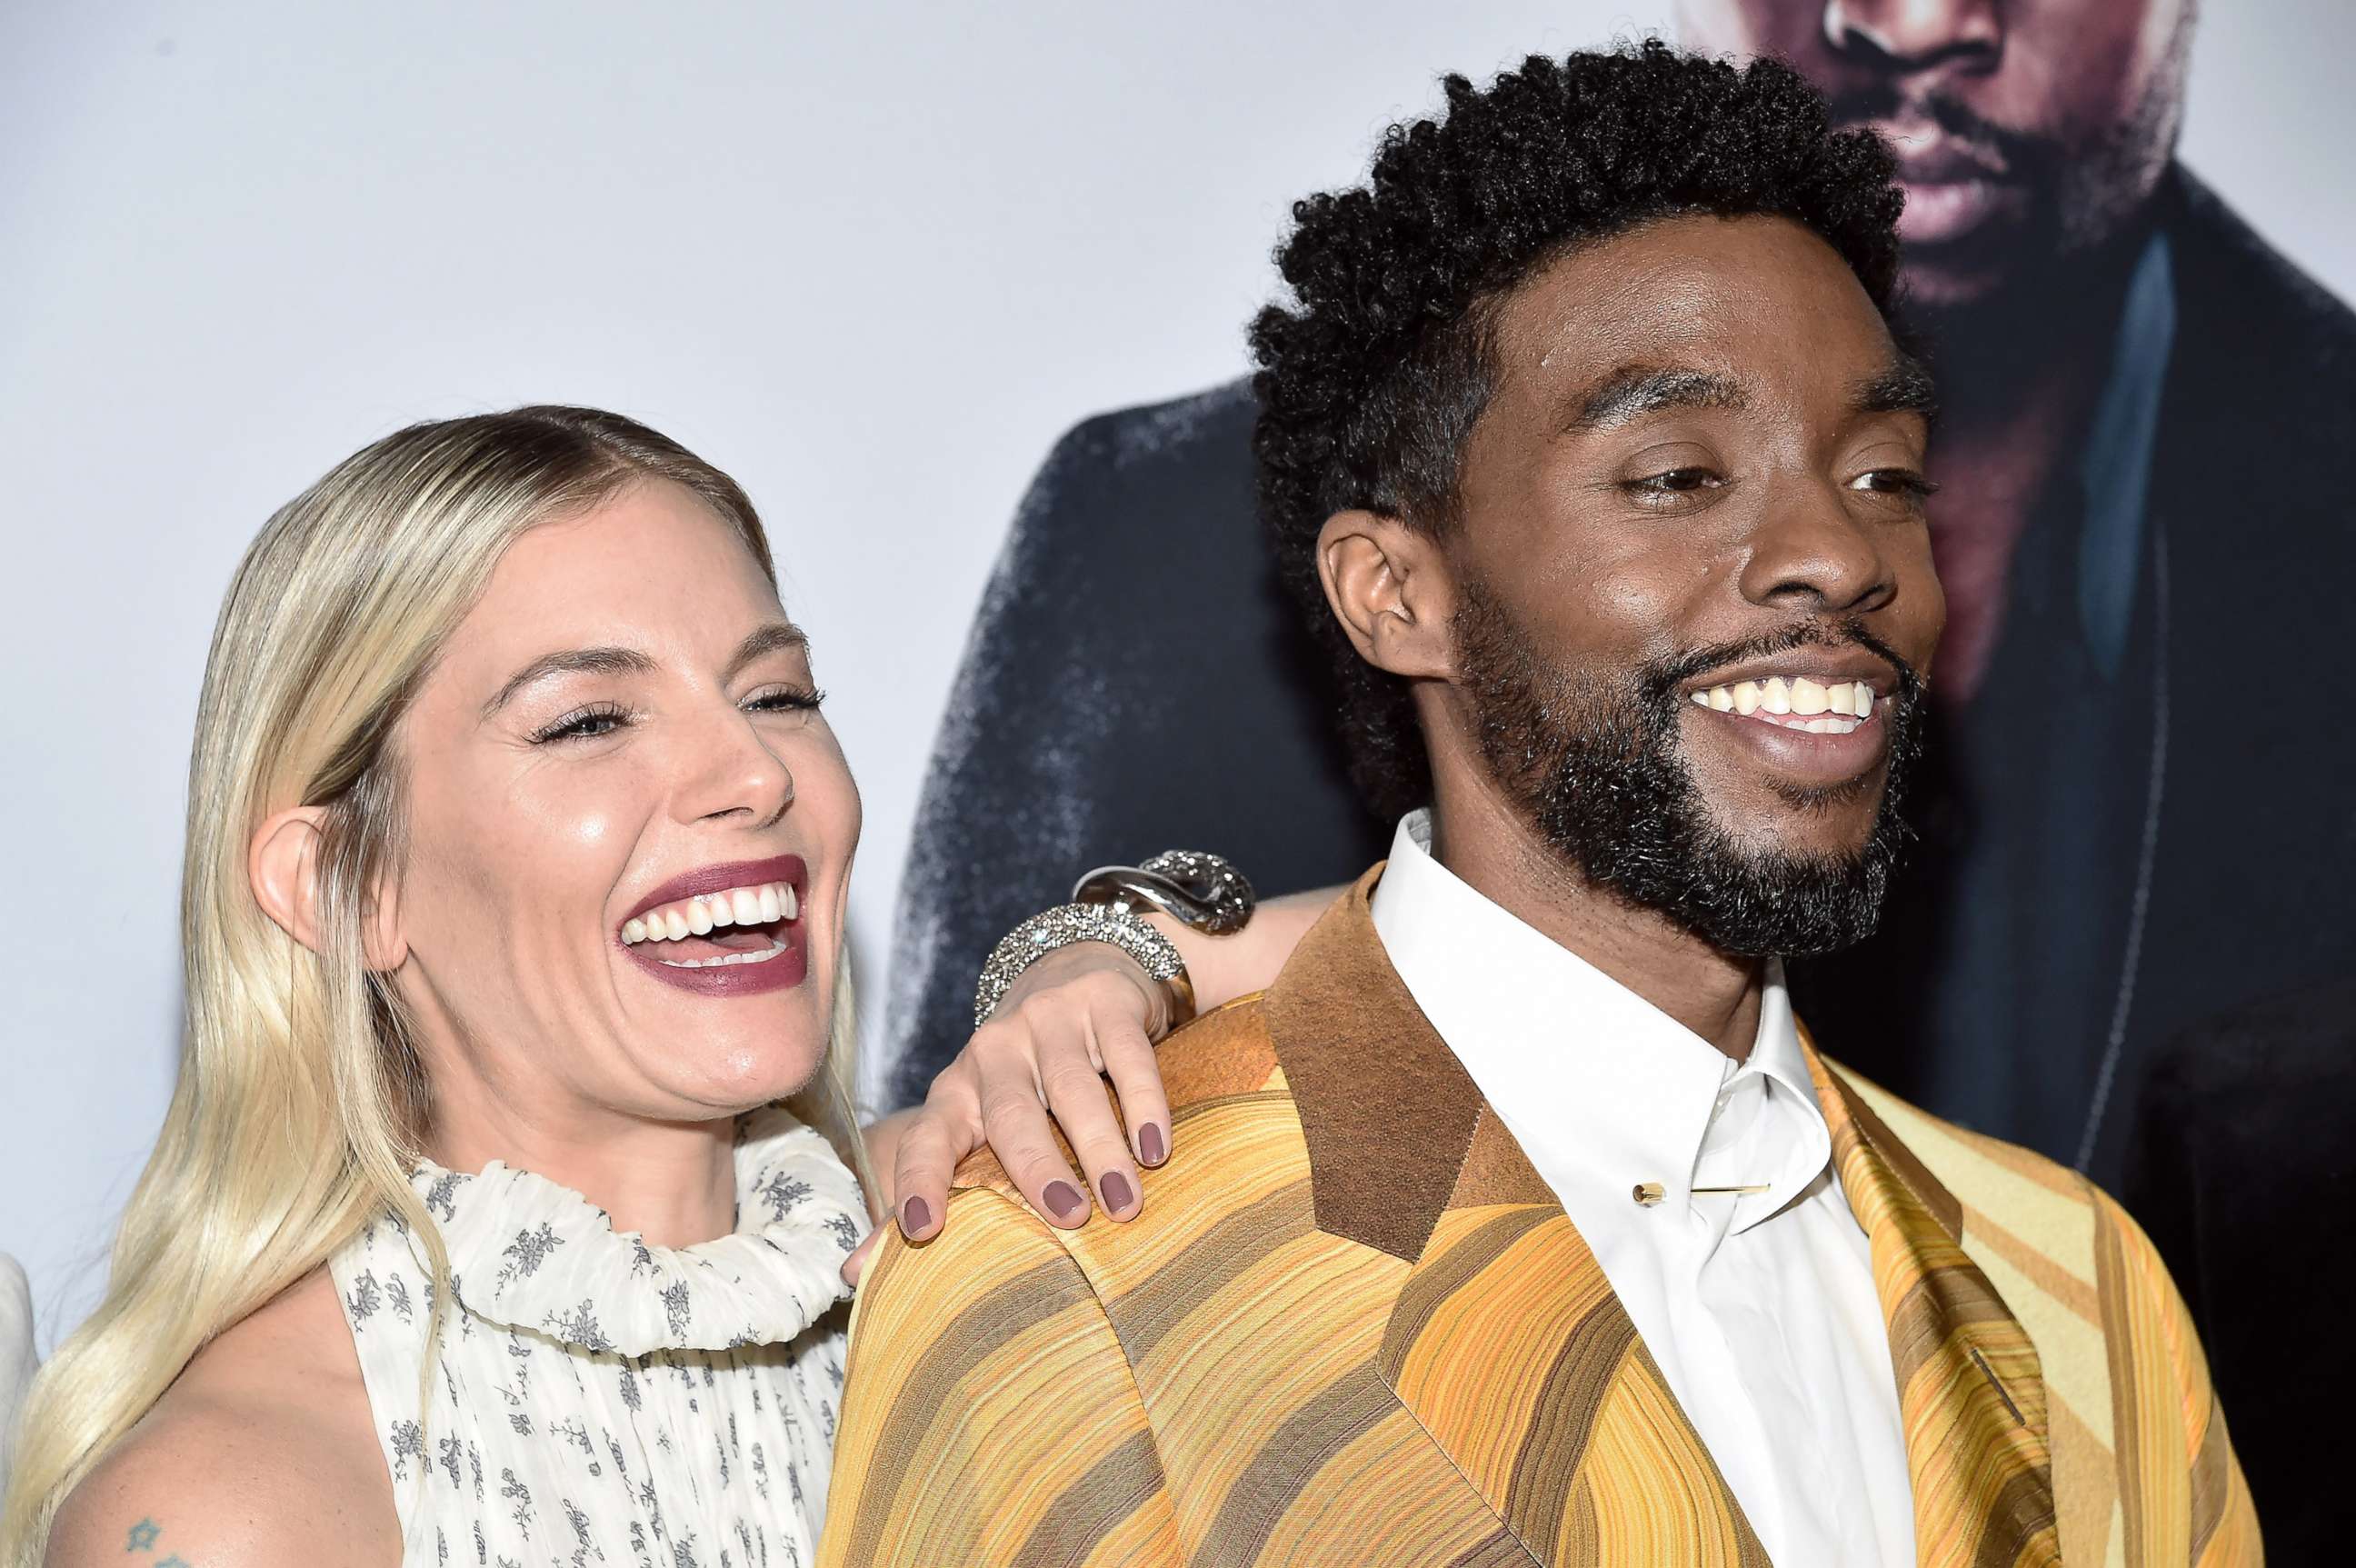 PHOTO: Sienna Miller and Chadwick Boseman attend the "21 Bridges" screening in New York City, Nov. 19, 2019.